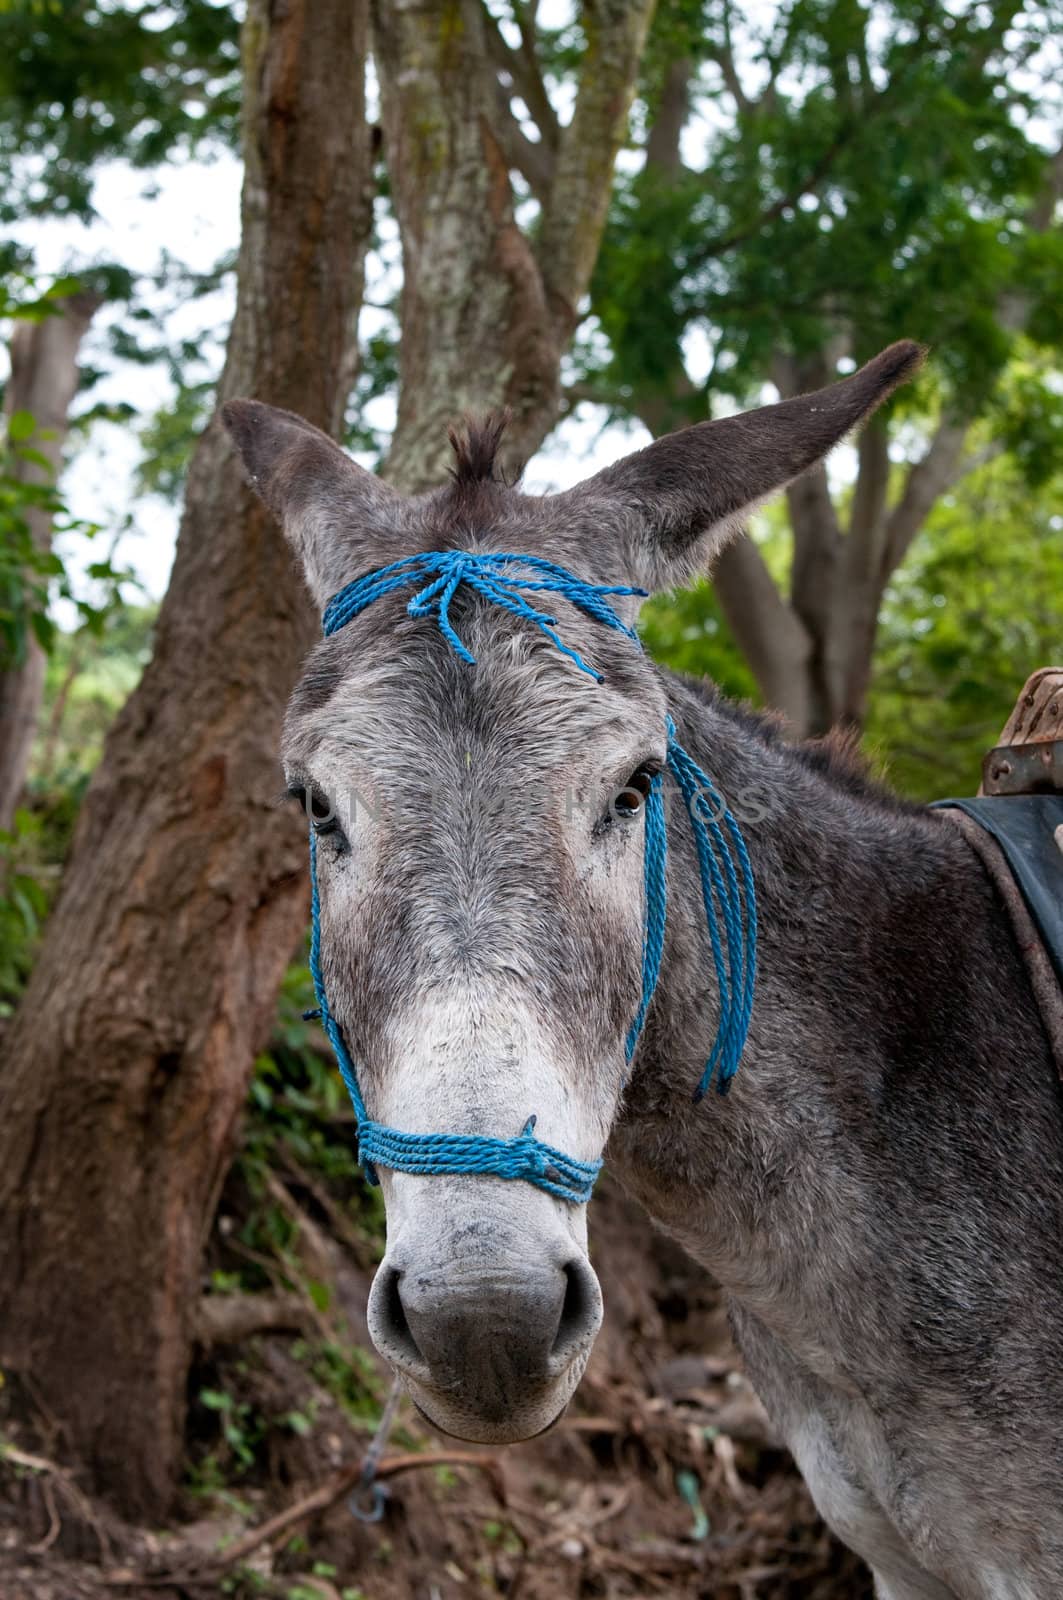 Donkey face by dyvan